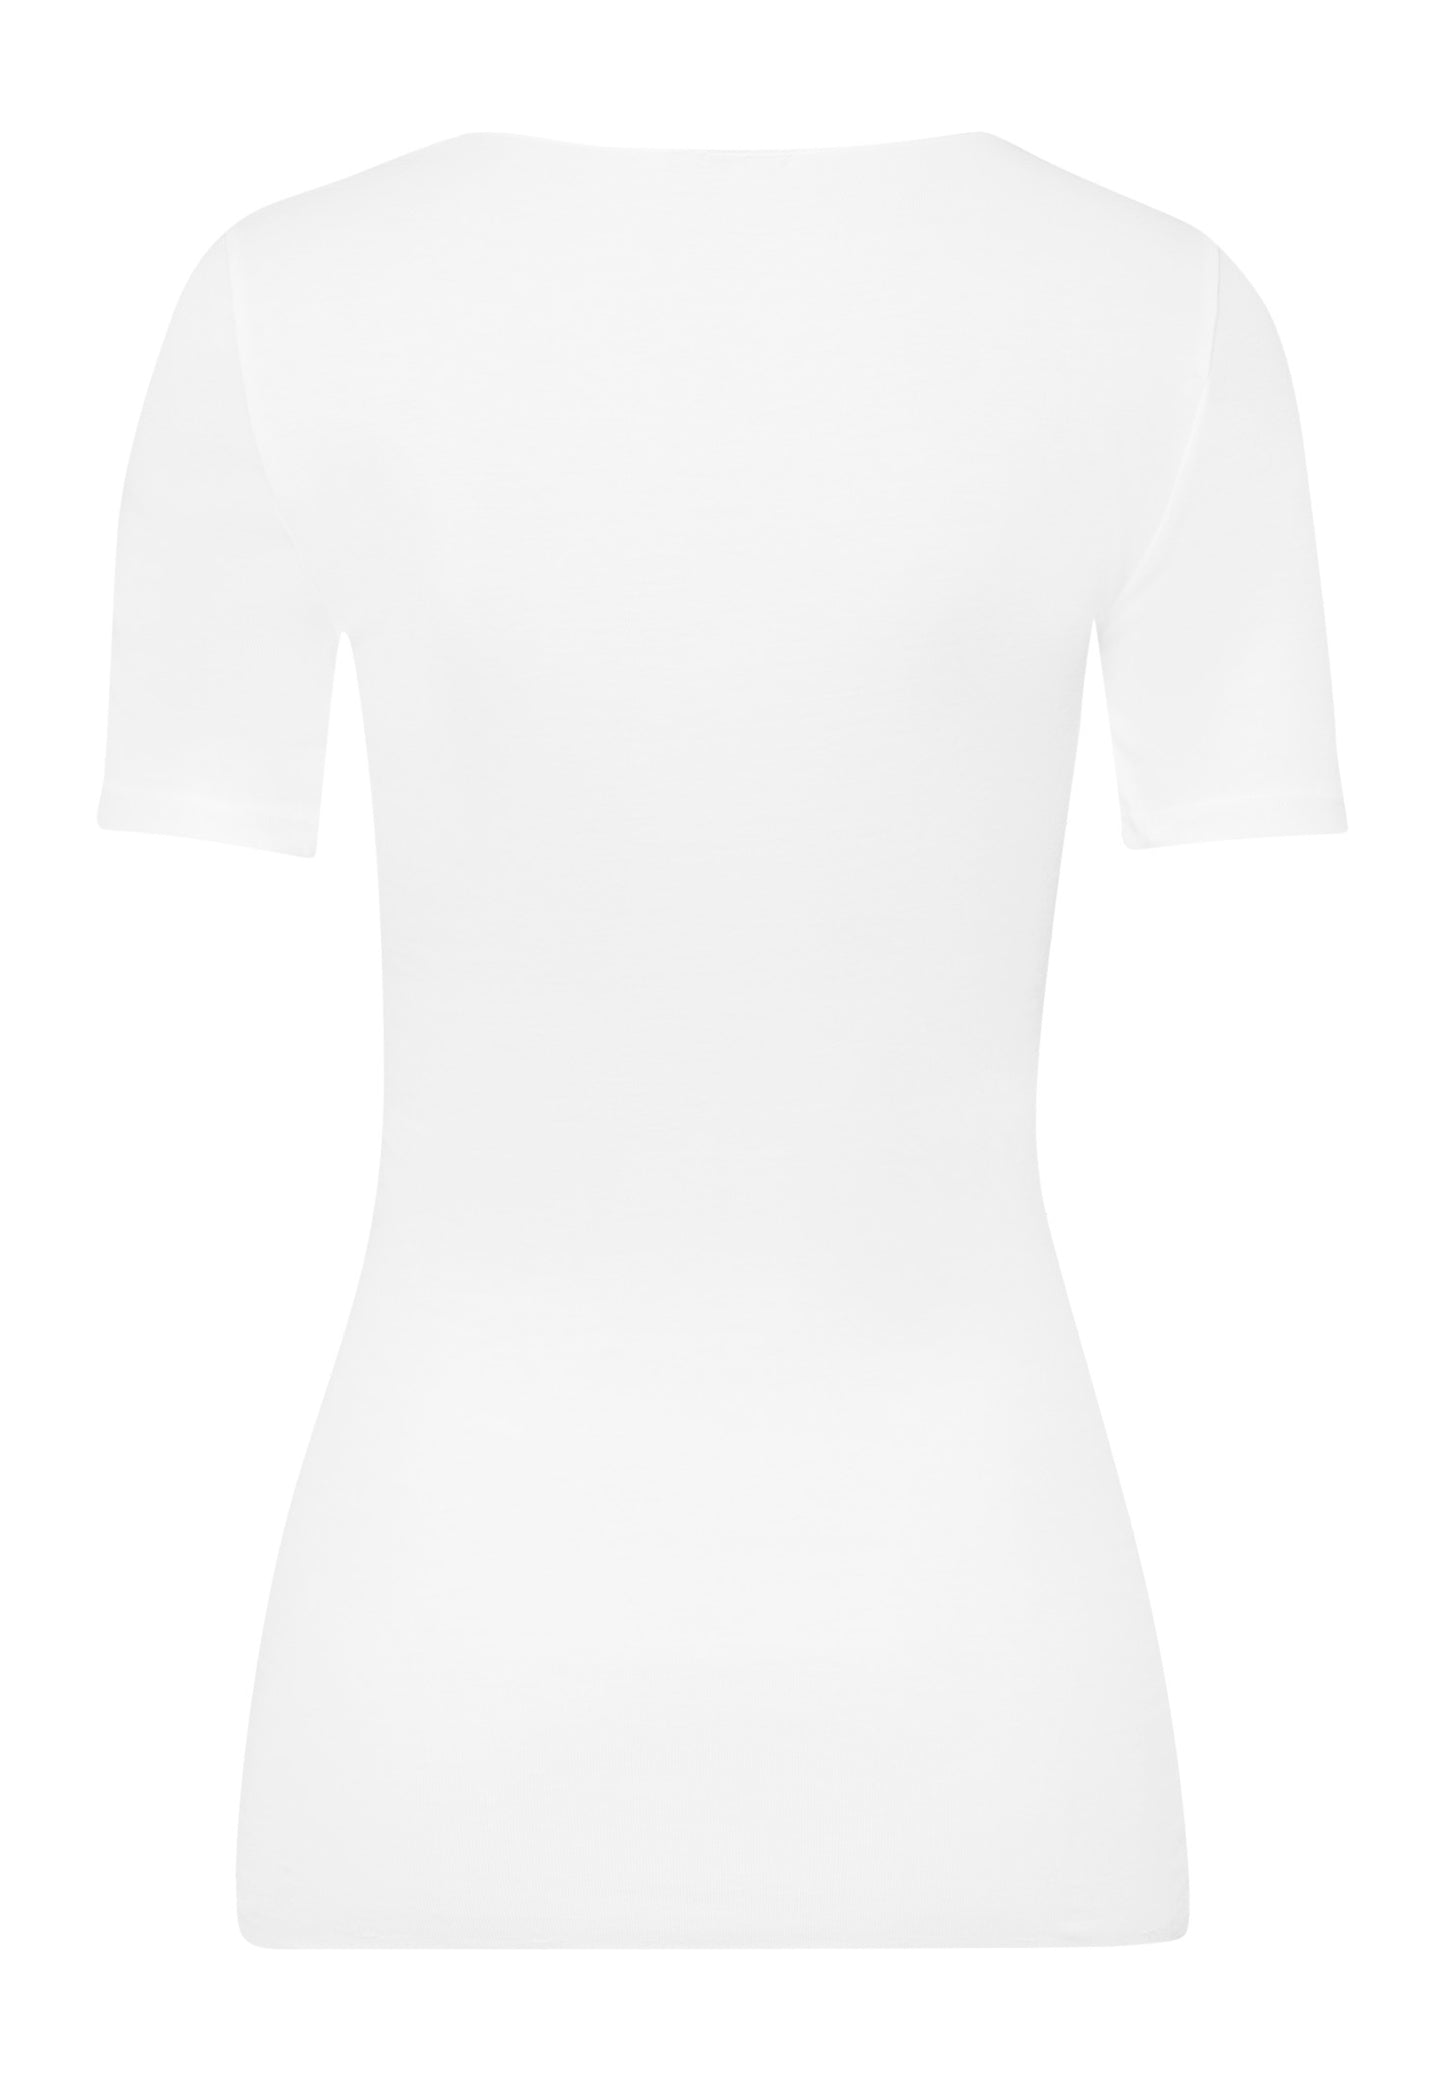 HANRO White Cotton Seamless V-Neck Short Sleeve Shirt